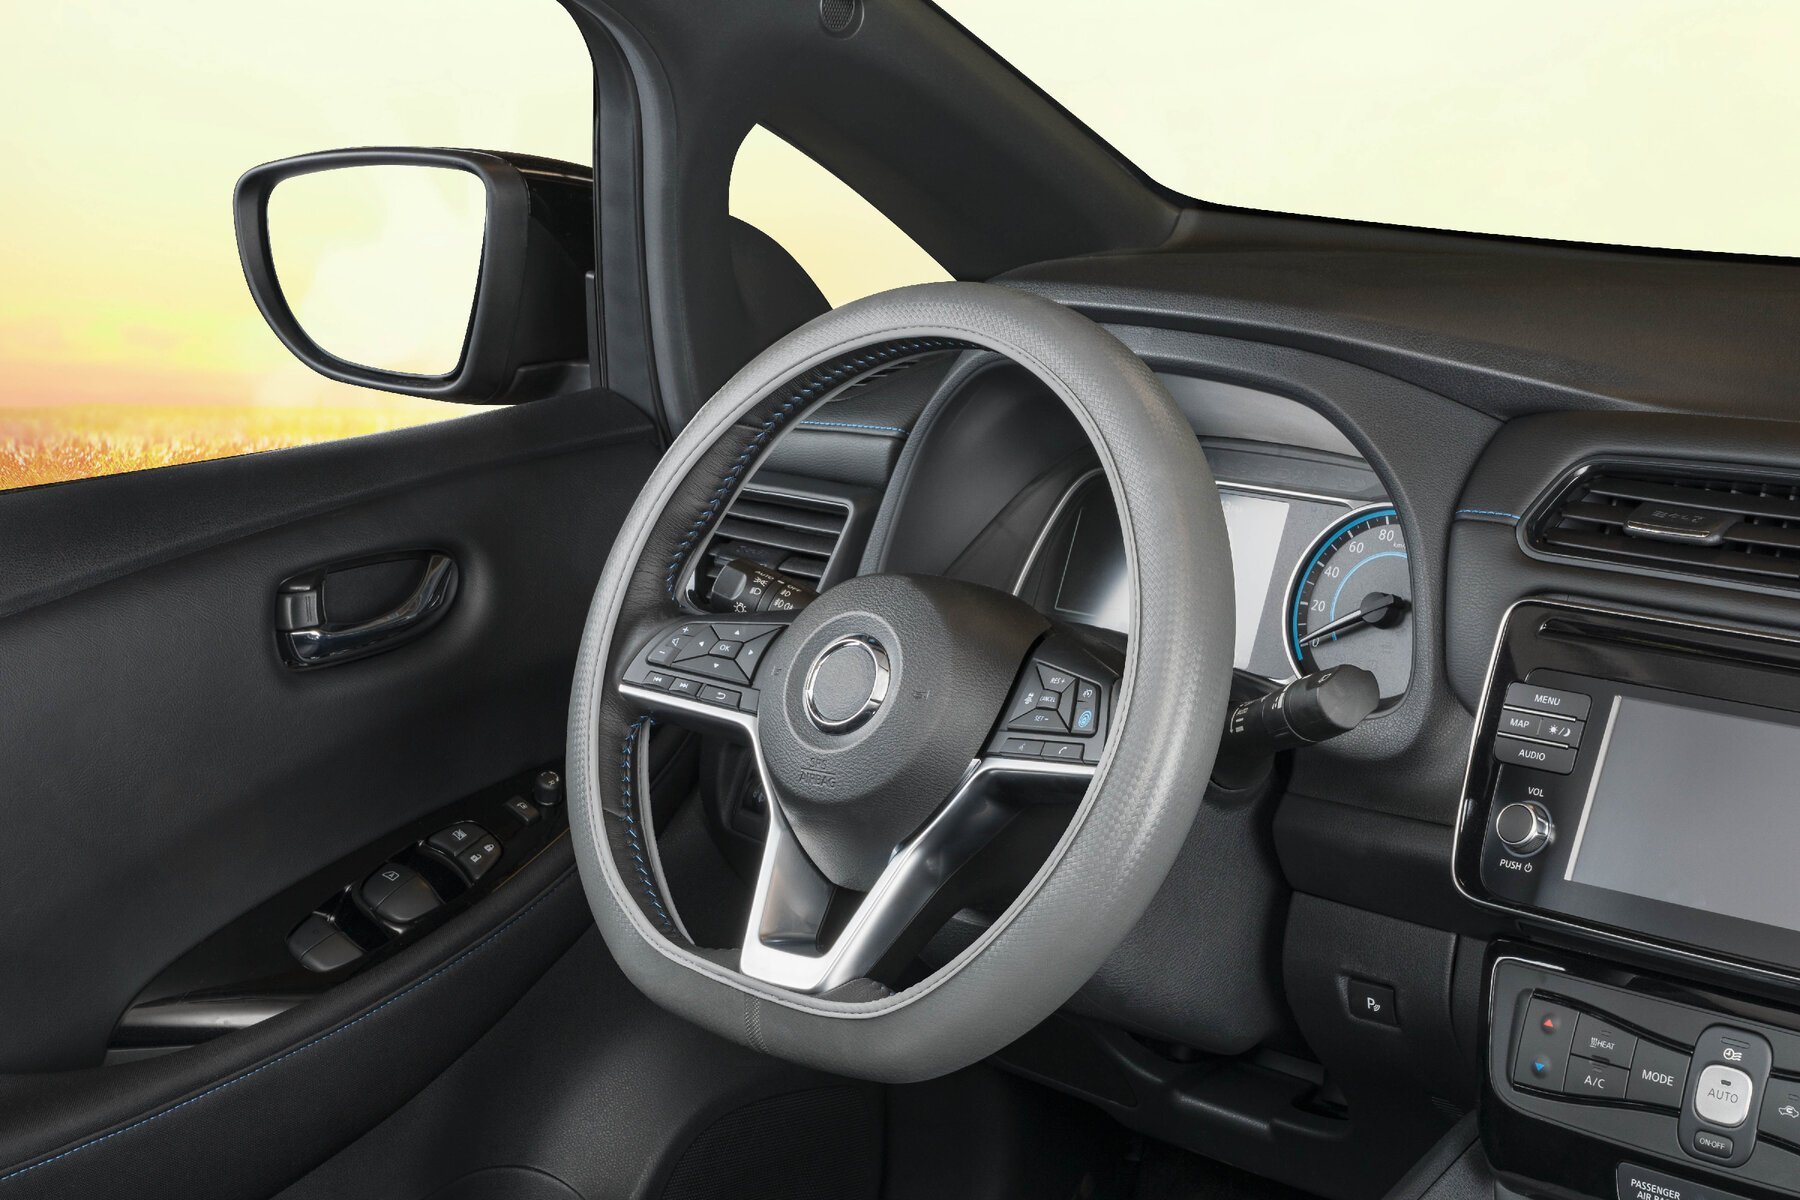 Steering wheel cover Soft Grip Carbon - 38 cm grey